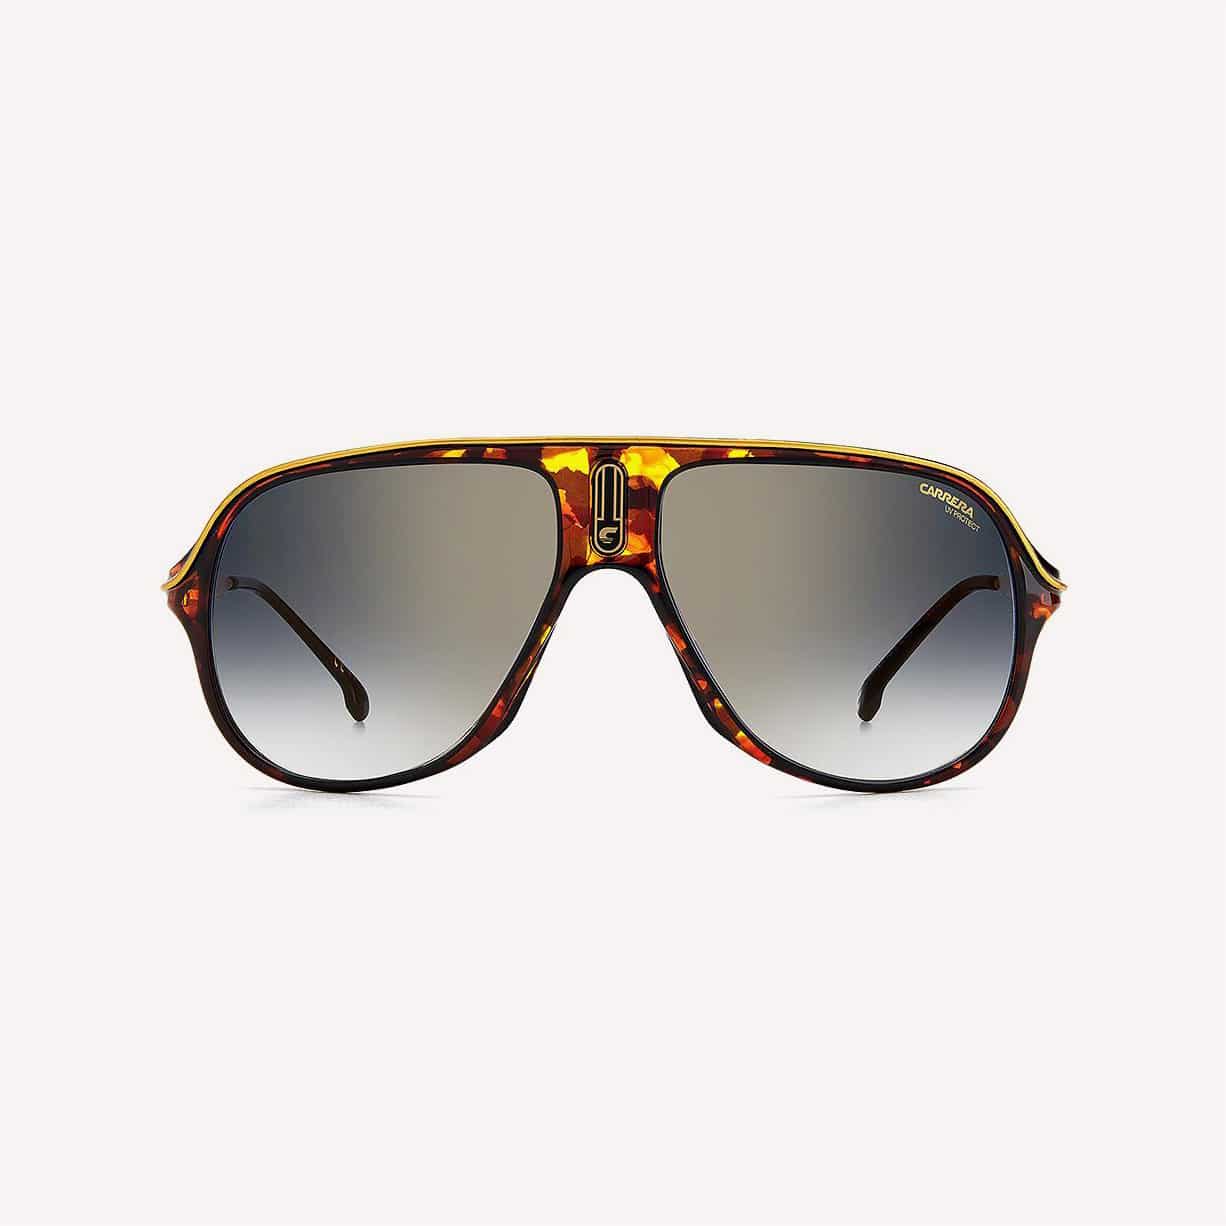 Carrera Safari65 sunglasses